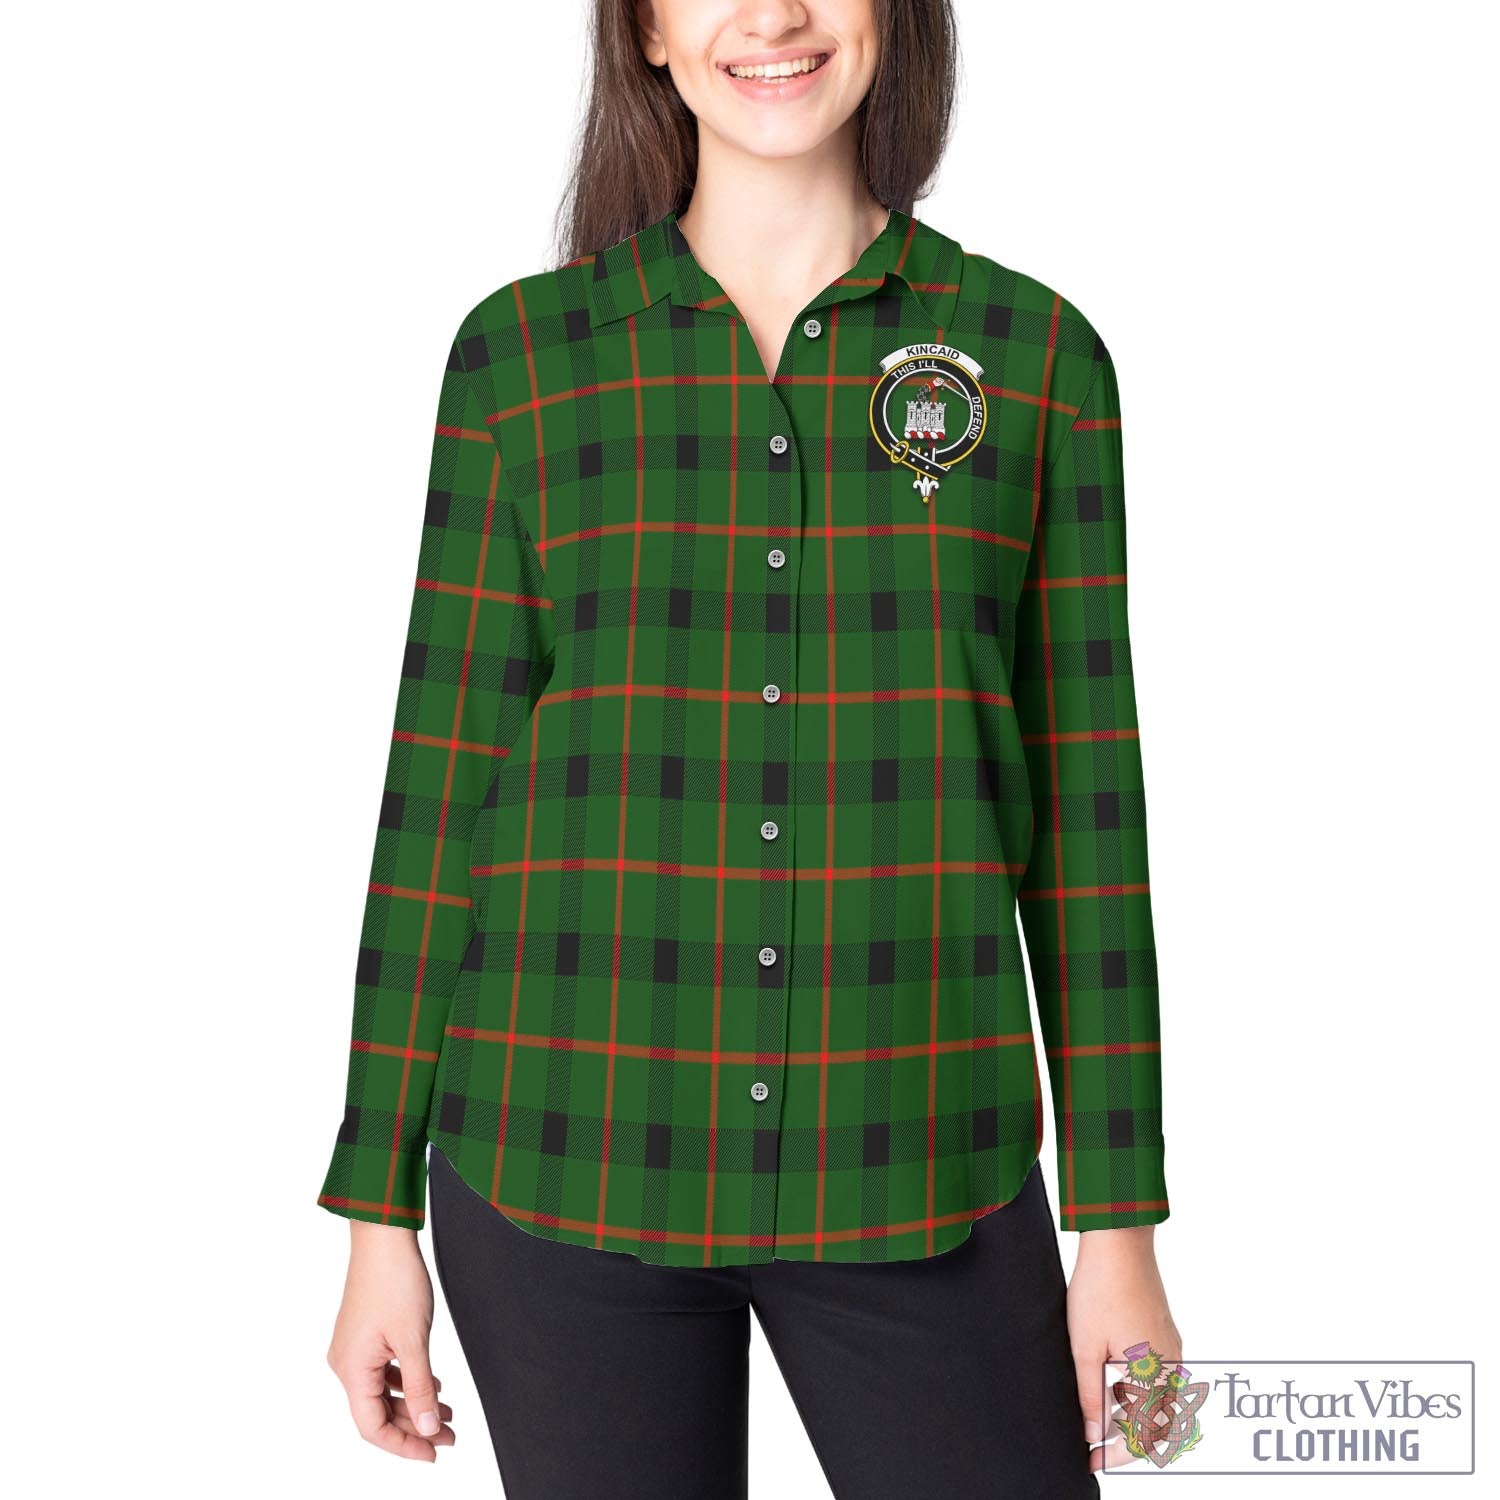 Tartan Vibes Clothing Kincaid Modern Tartan Womens Casual Shirt with Family Crest